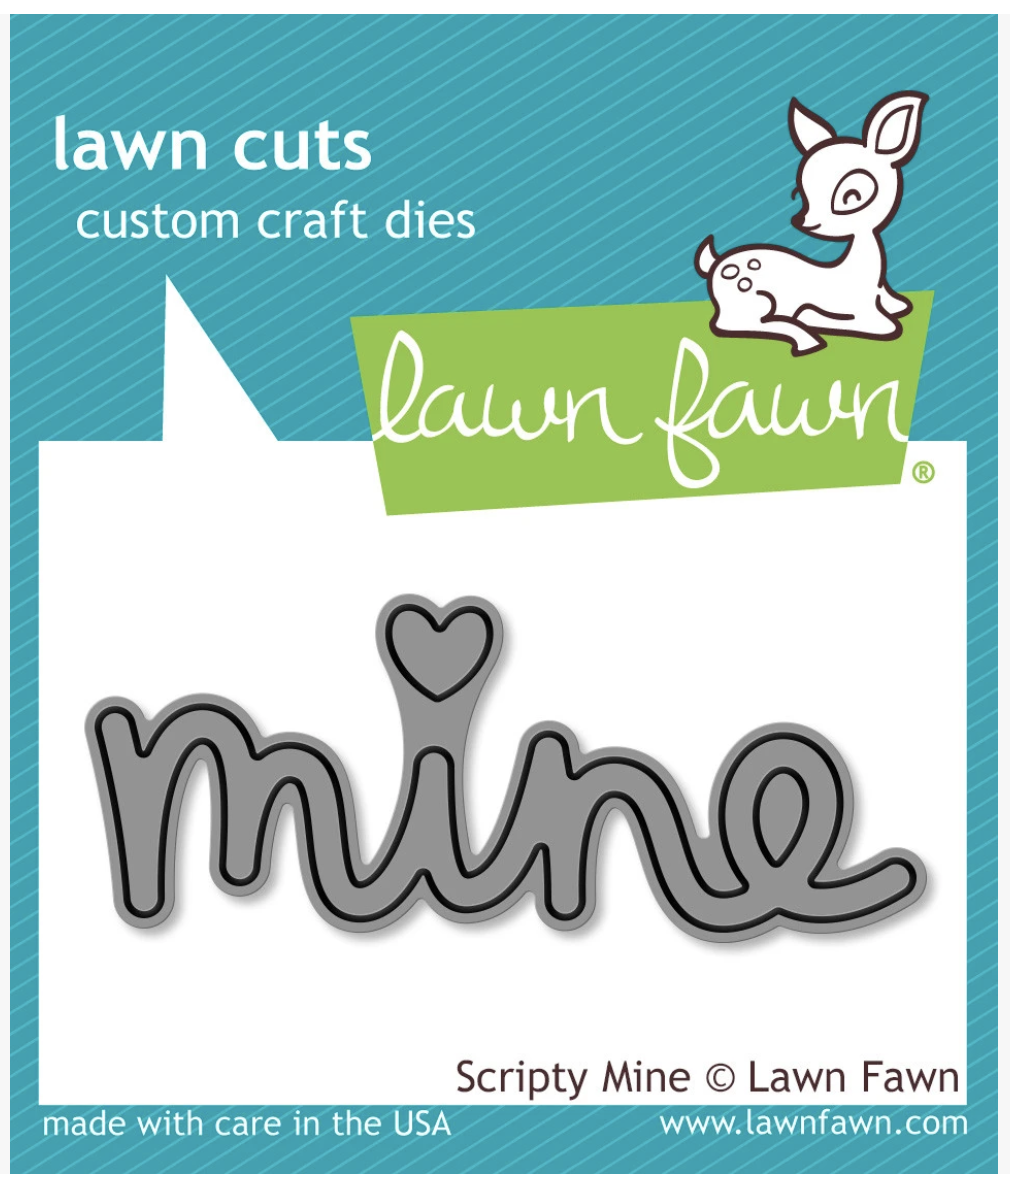 Lawn Fawn, scripty mine